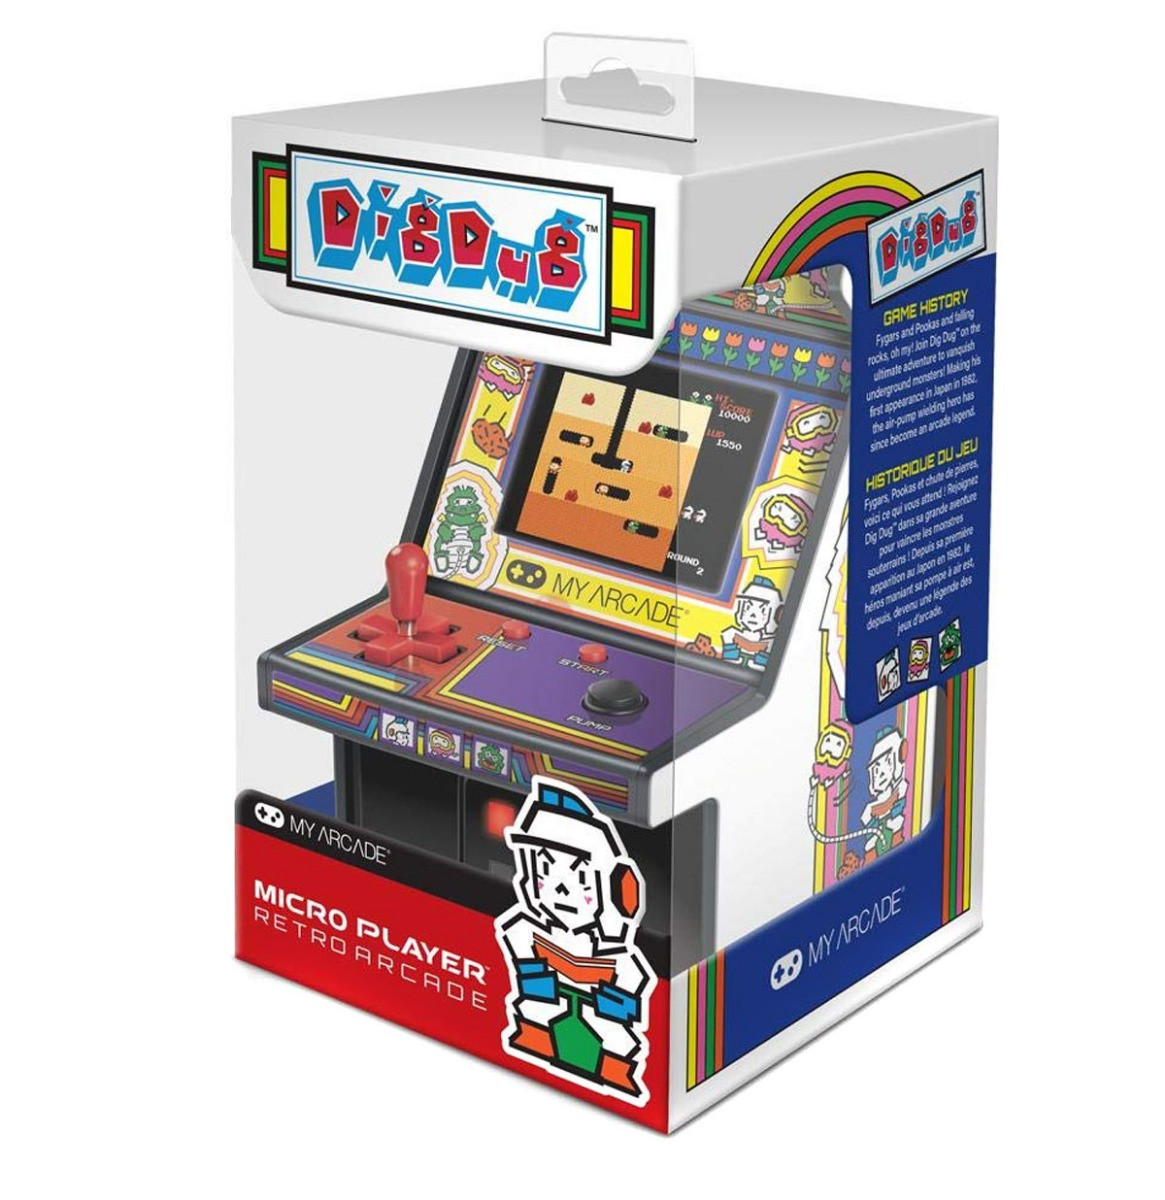 My Arcade Micro Player - DigDug